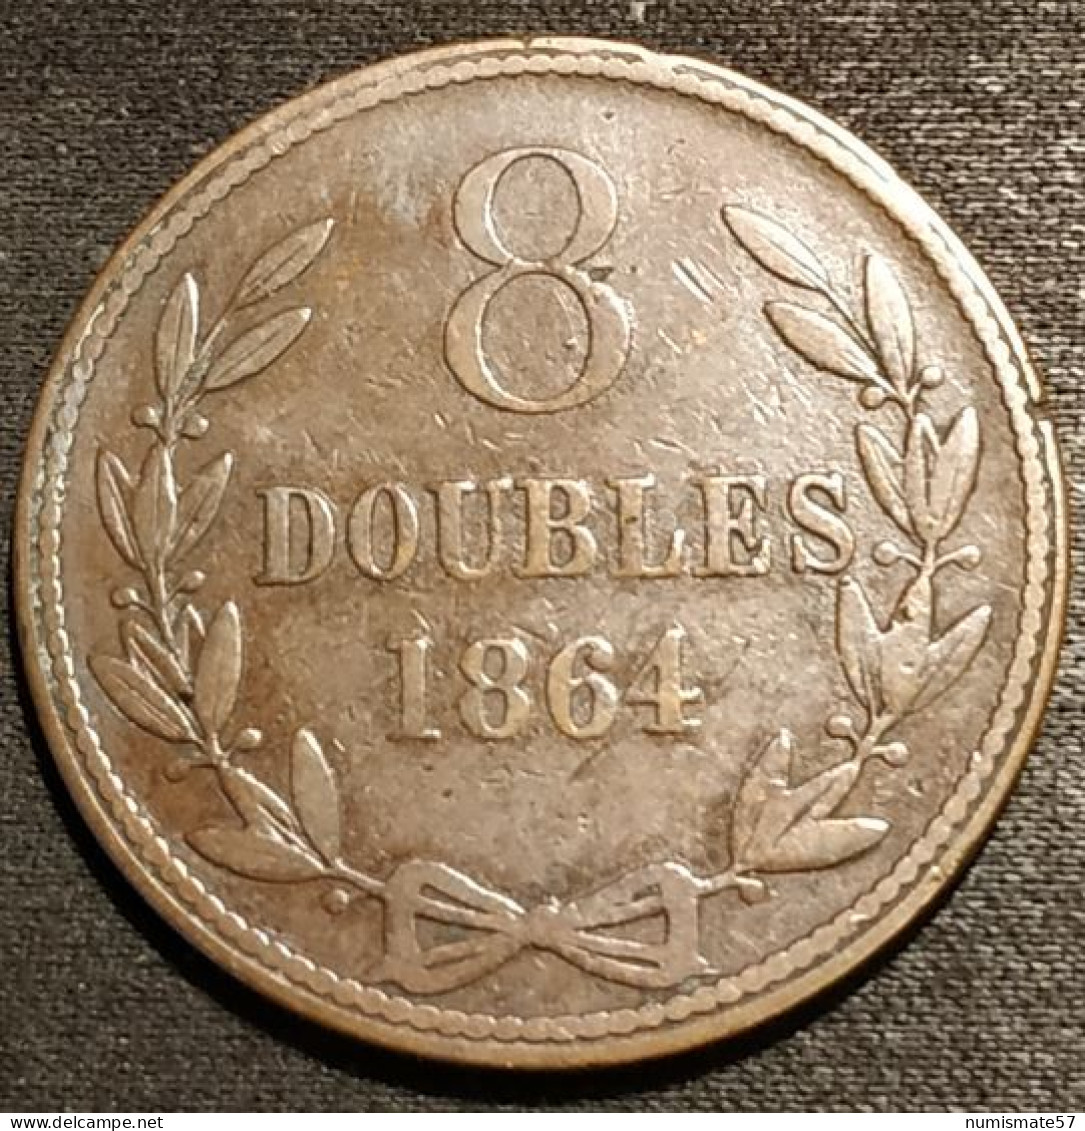 GUERNESEY - 8 DOUBLES 1864 - KM 7 - GUERNSEY - Guernsey